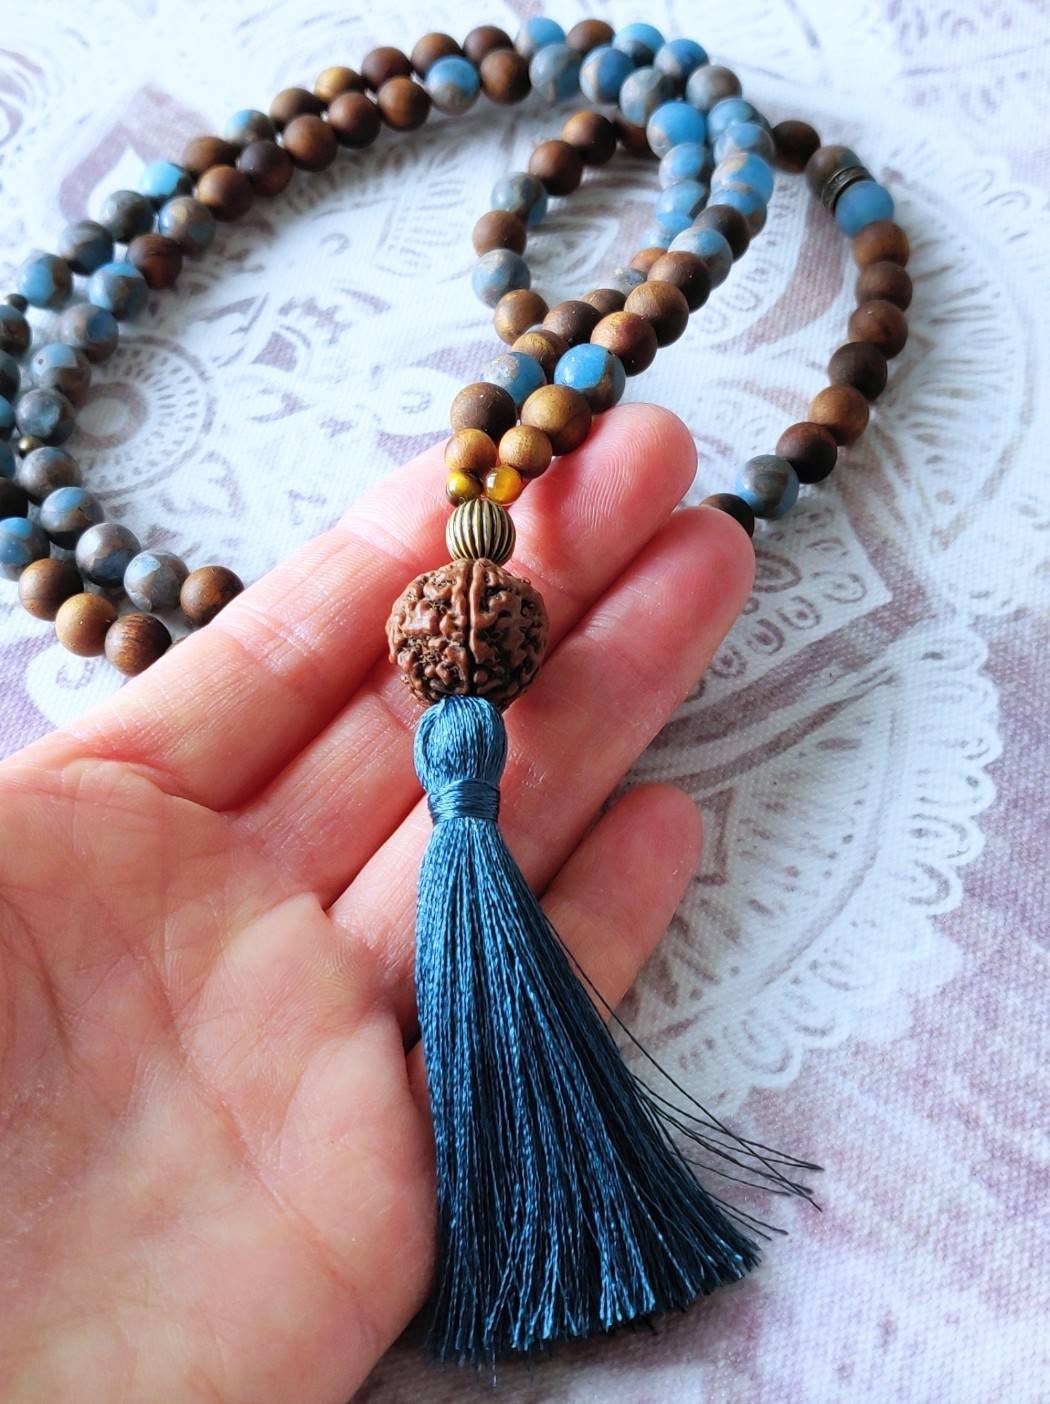 Wholesale Mala Beads Bracelet Necklace for Yoga Meditation - Dearbeads